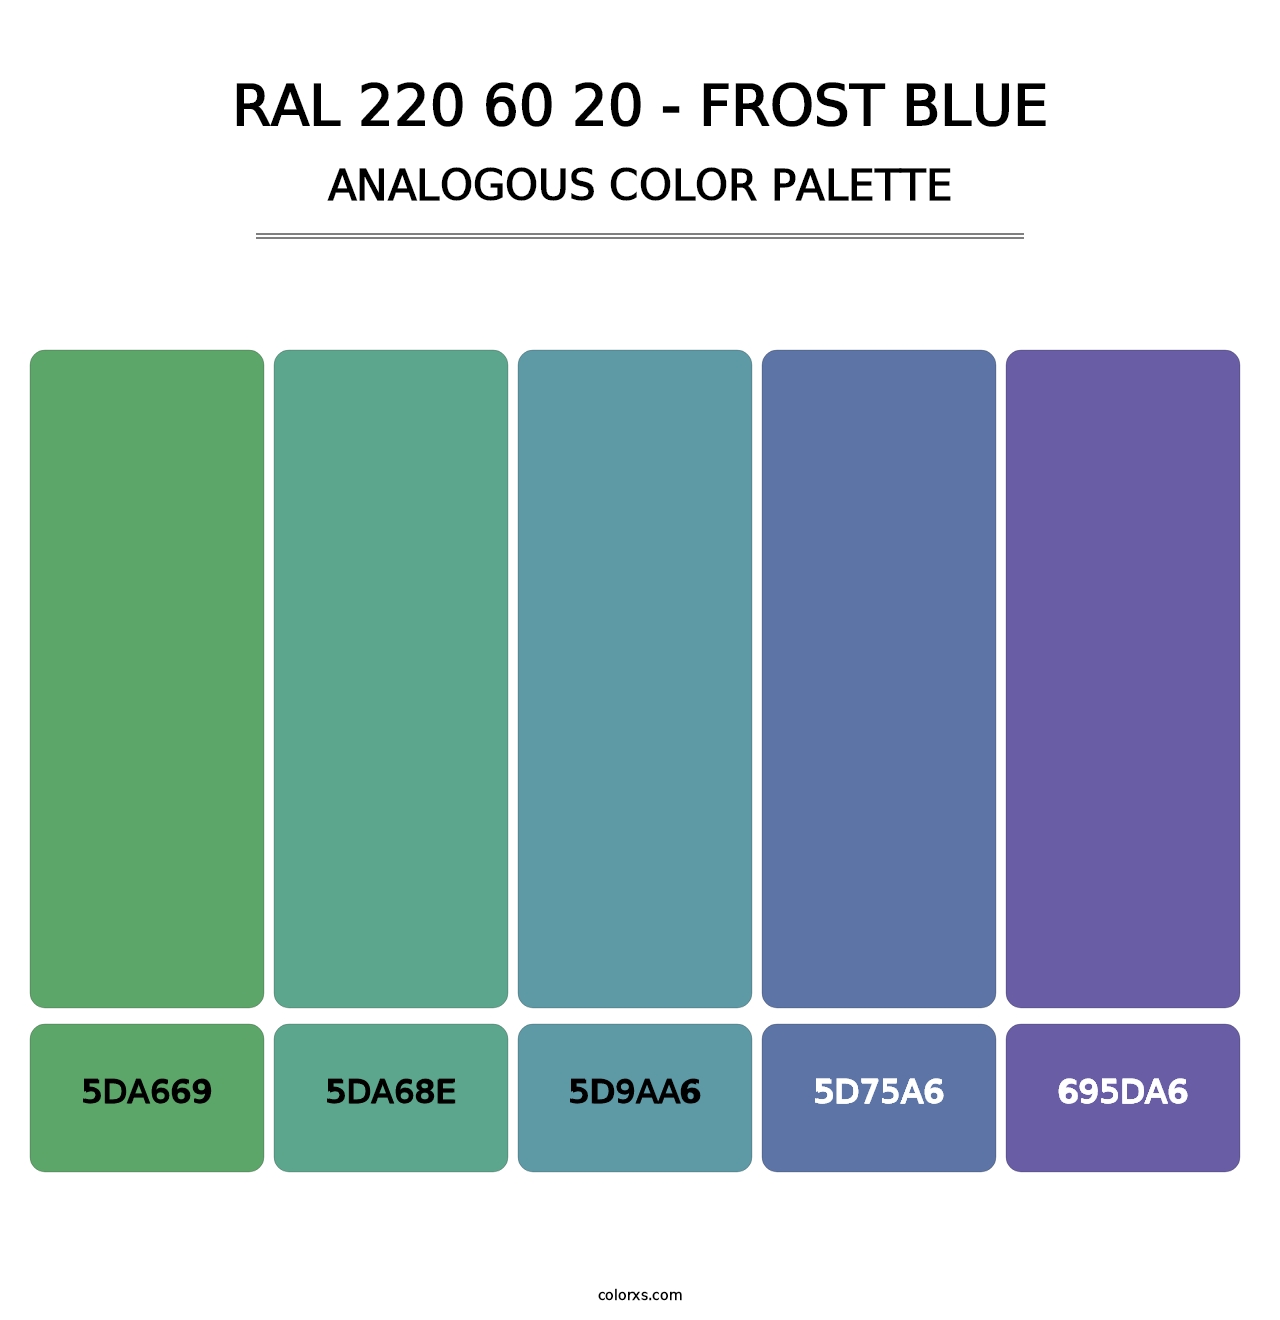 RAL 220 60 20 - Frost Blue - Analogous Color Palette